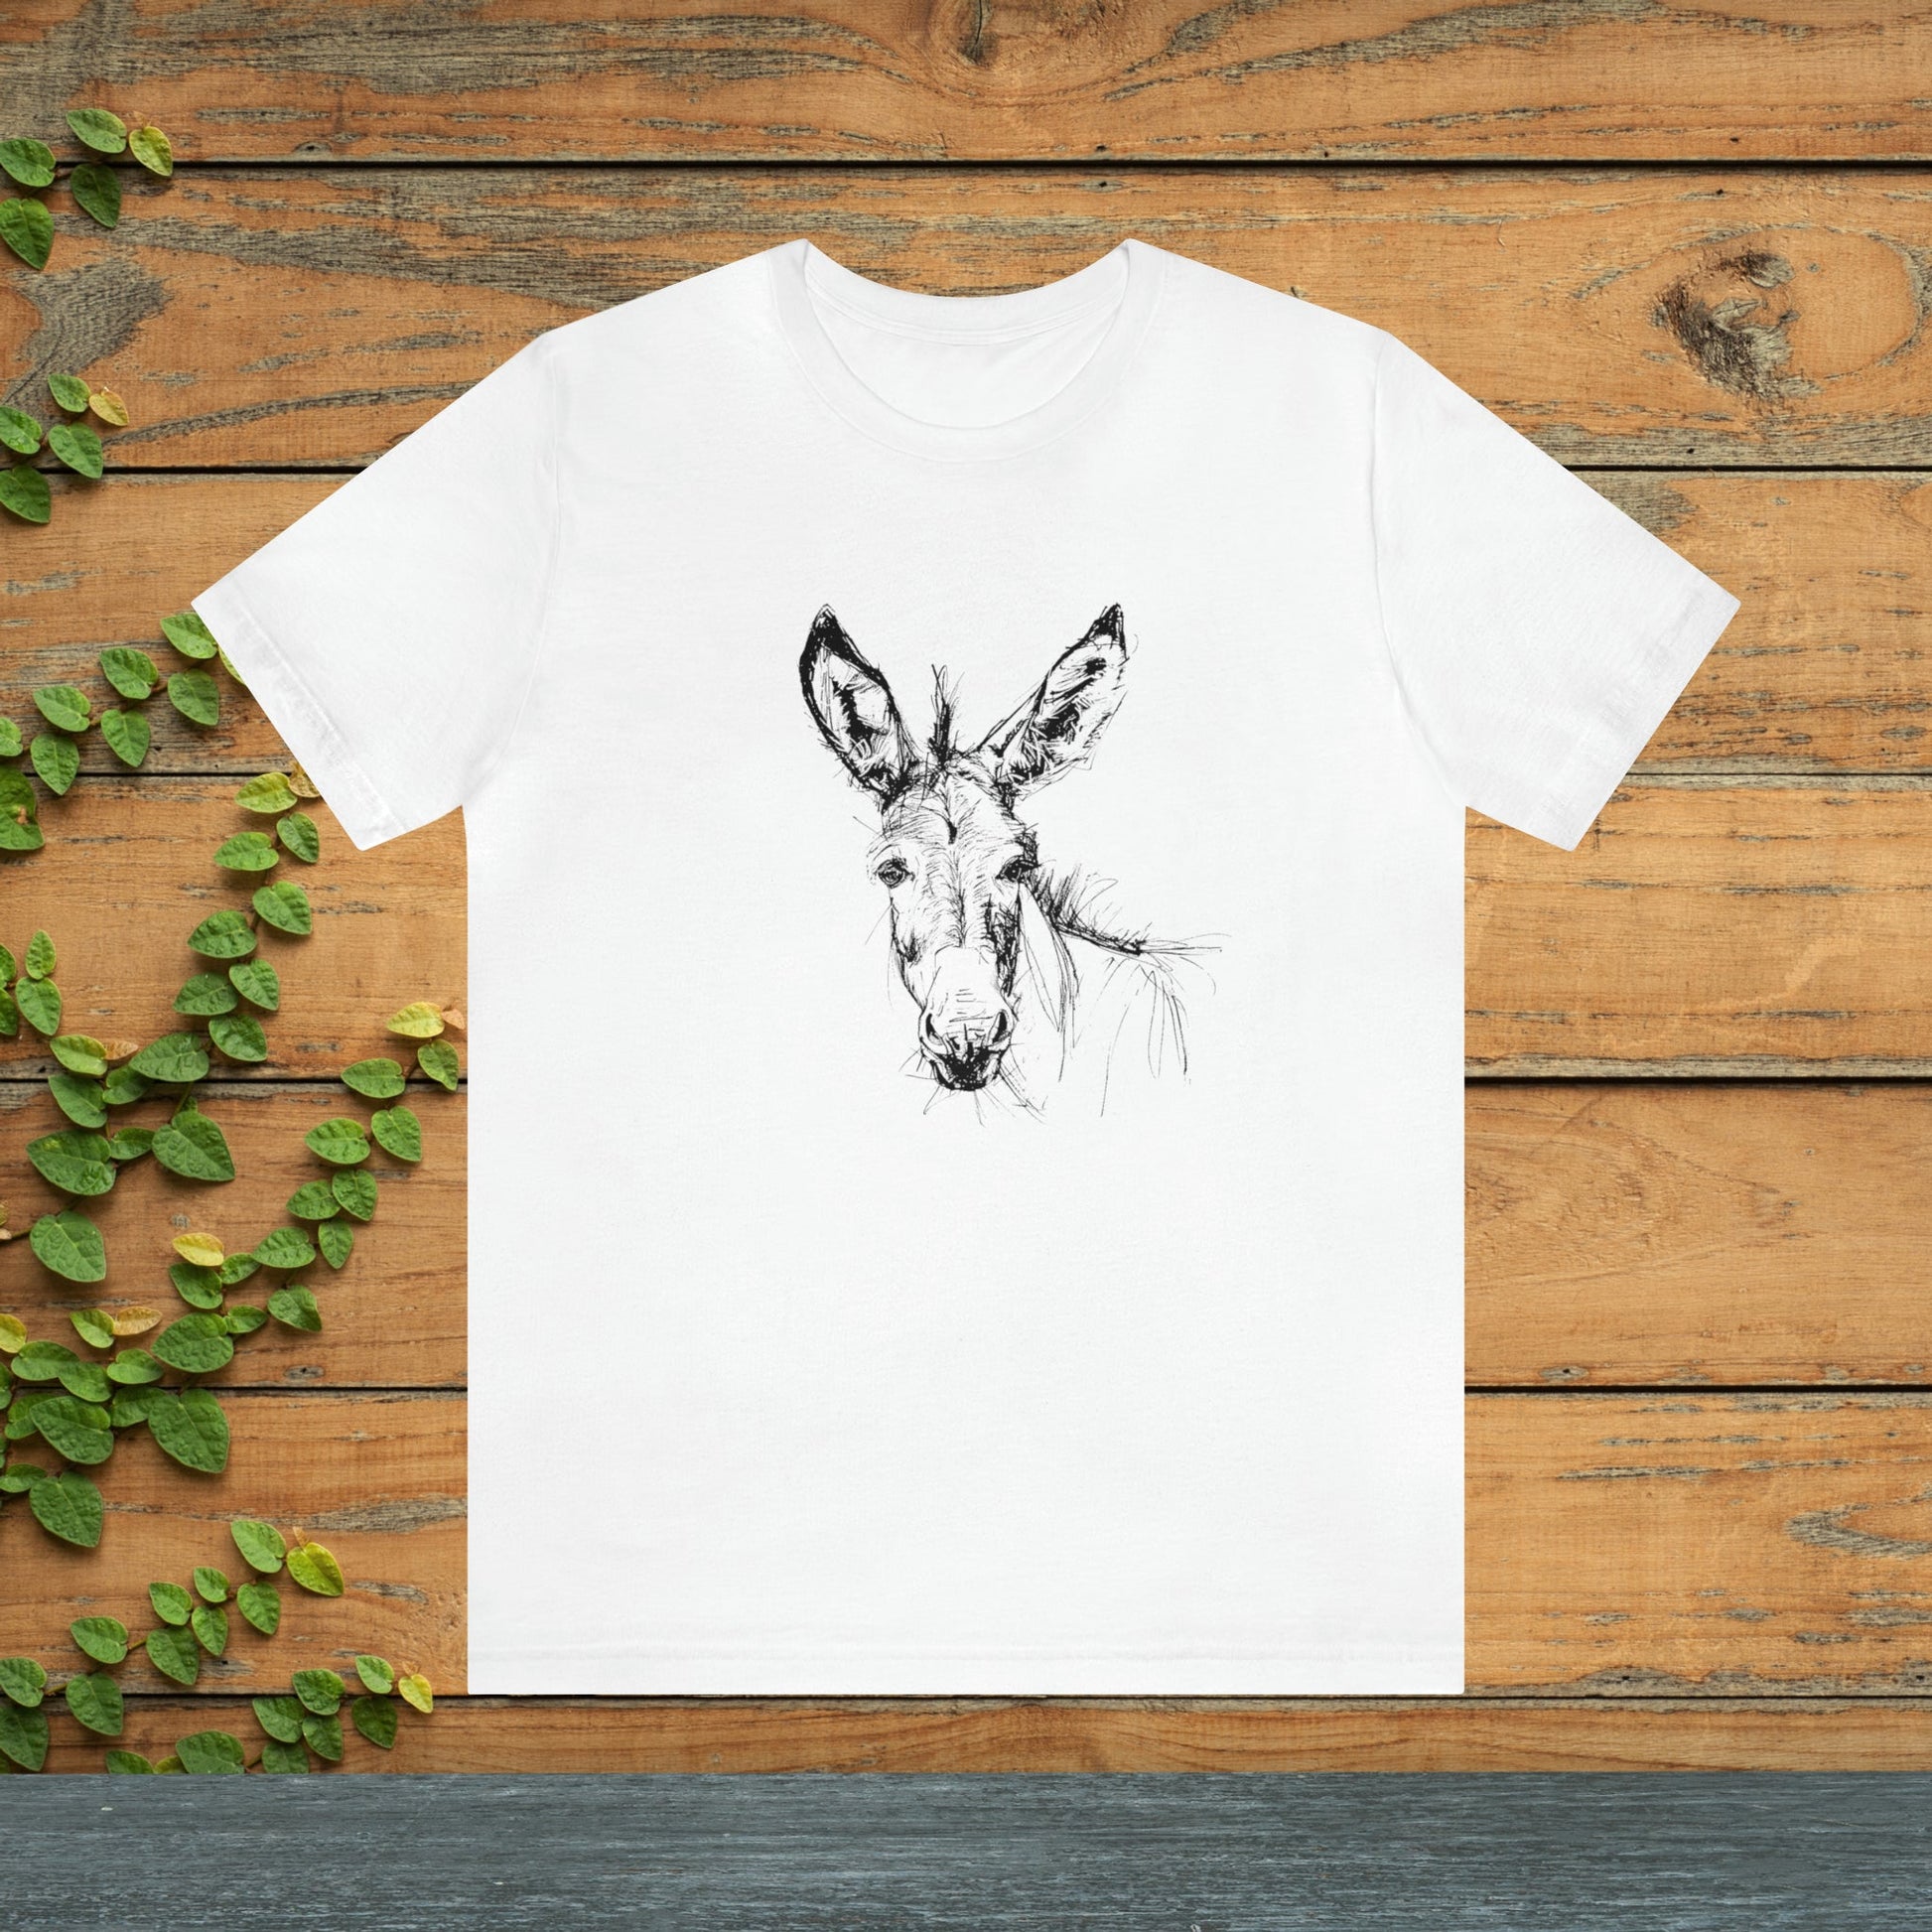 Donkey T-Shirt, Line Drawing on Unisex T-Shirt, Man or Woman Tees - FlooredByArt